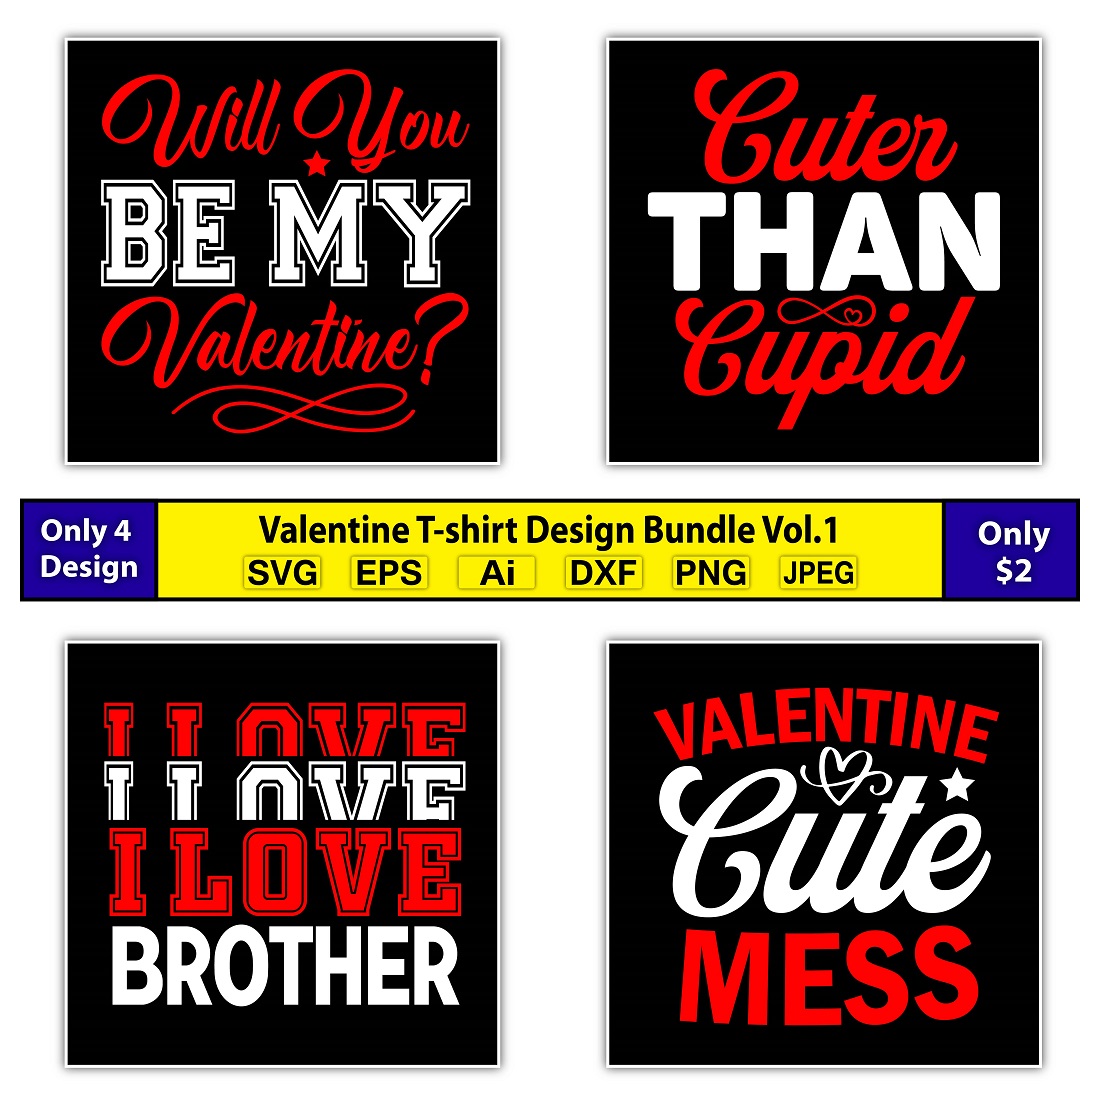 Valentine T-shirt Design Bundle Vol.1 created by ArtStore22.